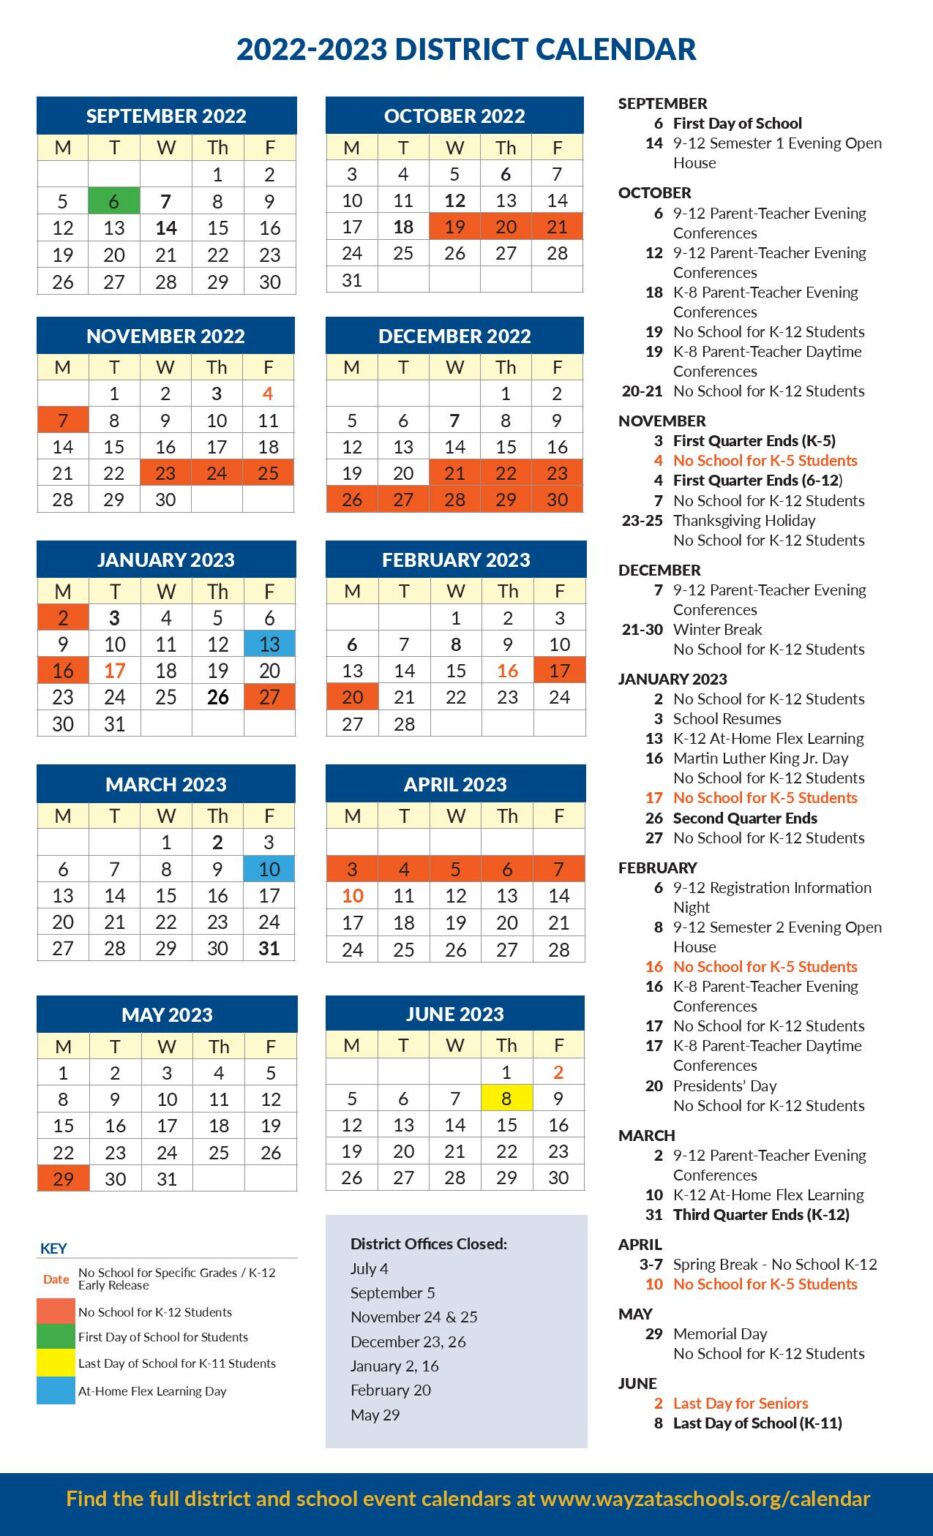 Wayzata Public Schools Calendar 2022 2023 in PDF